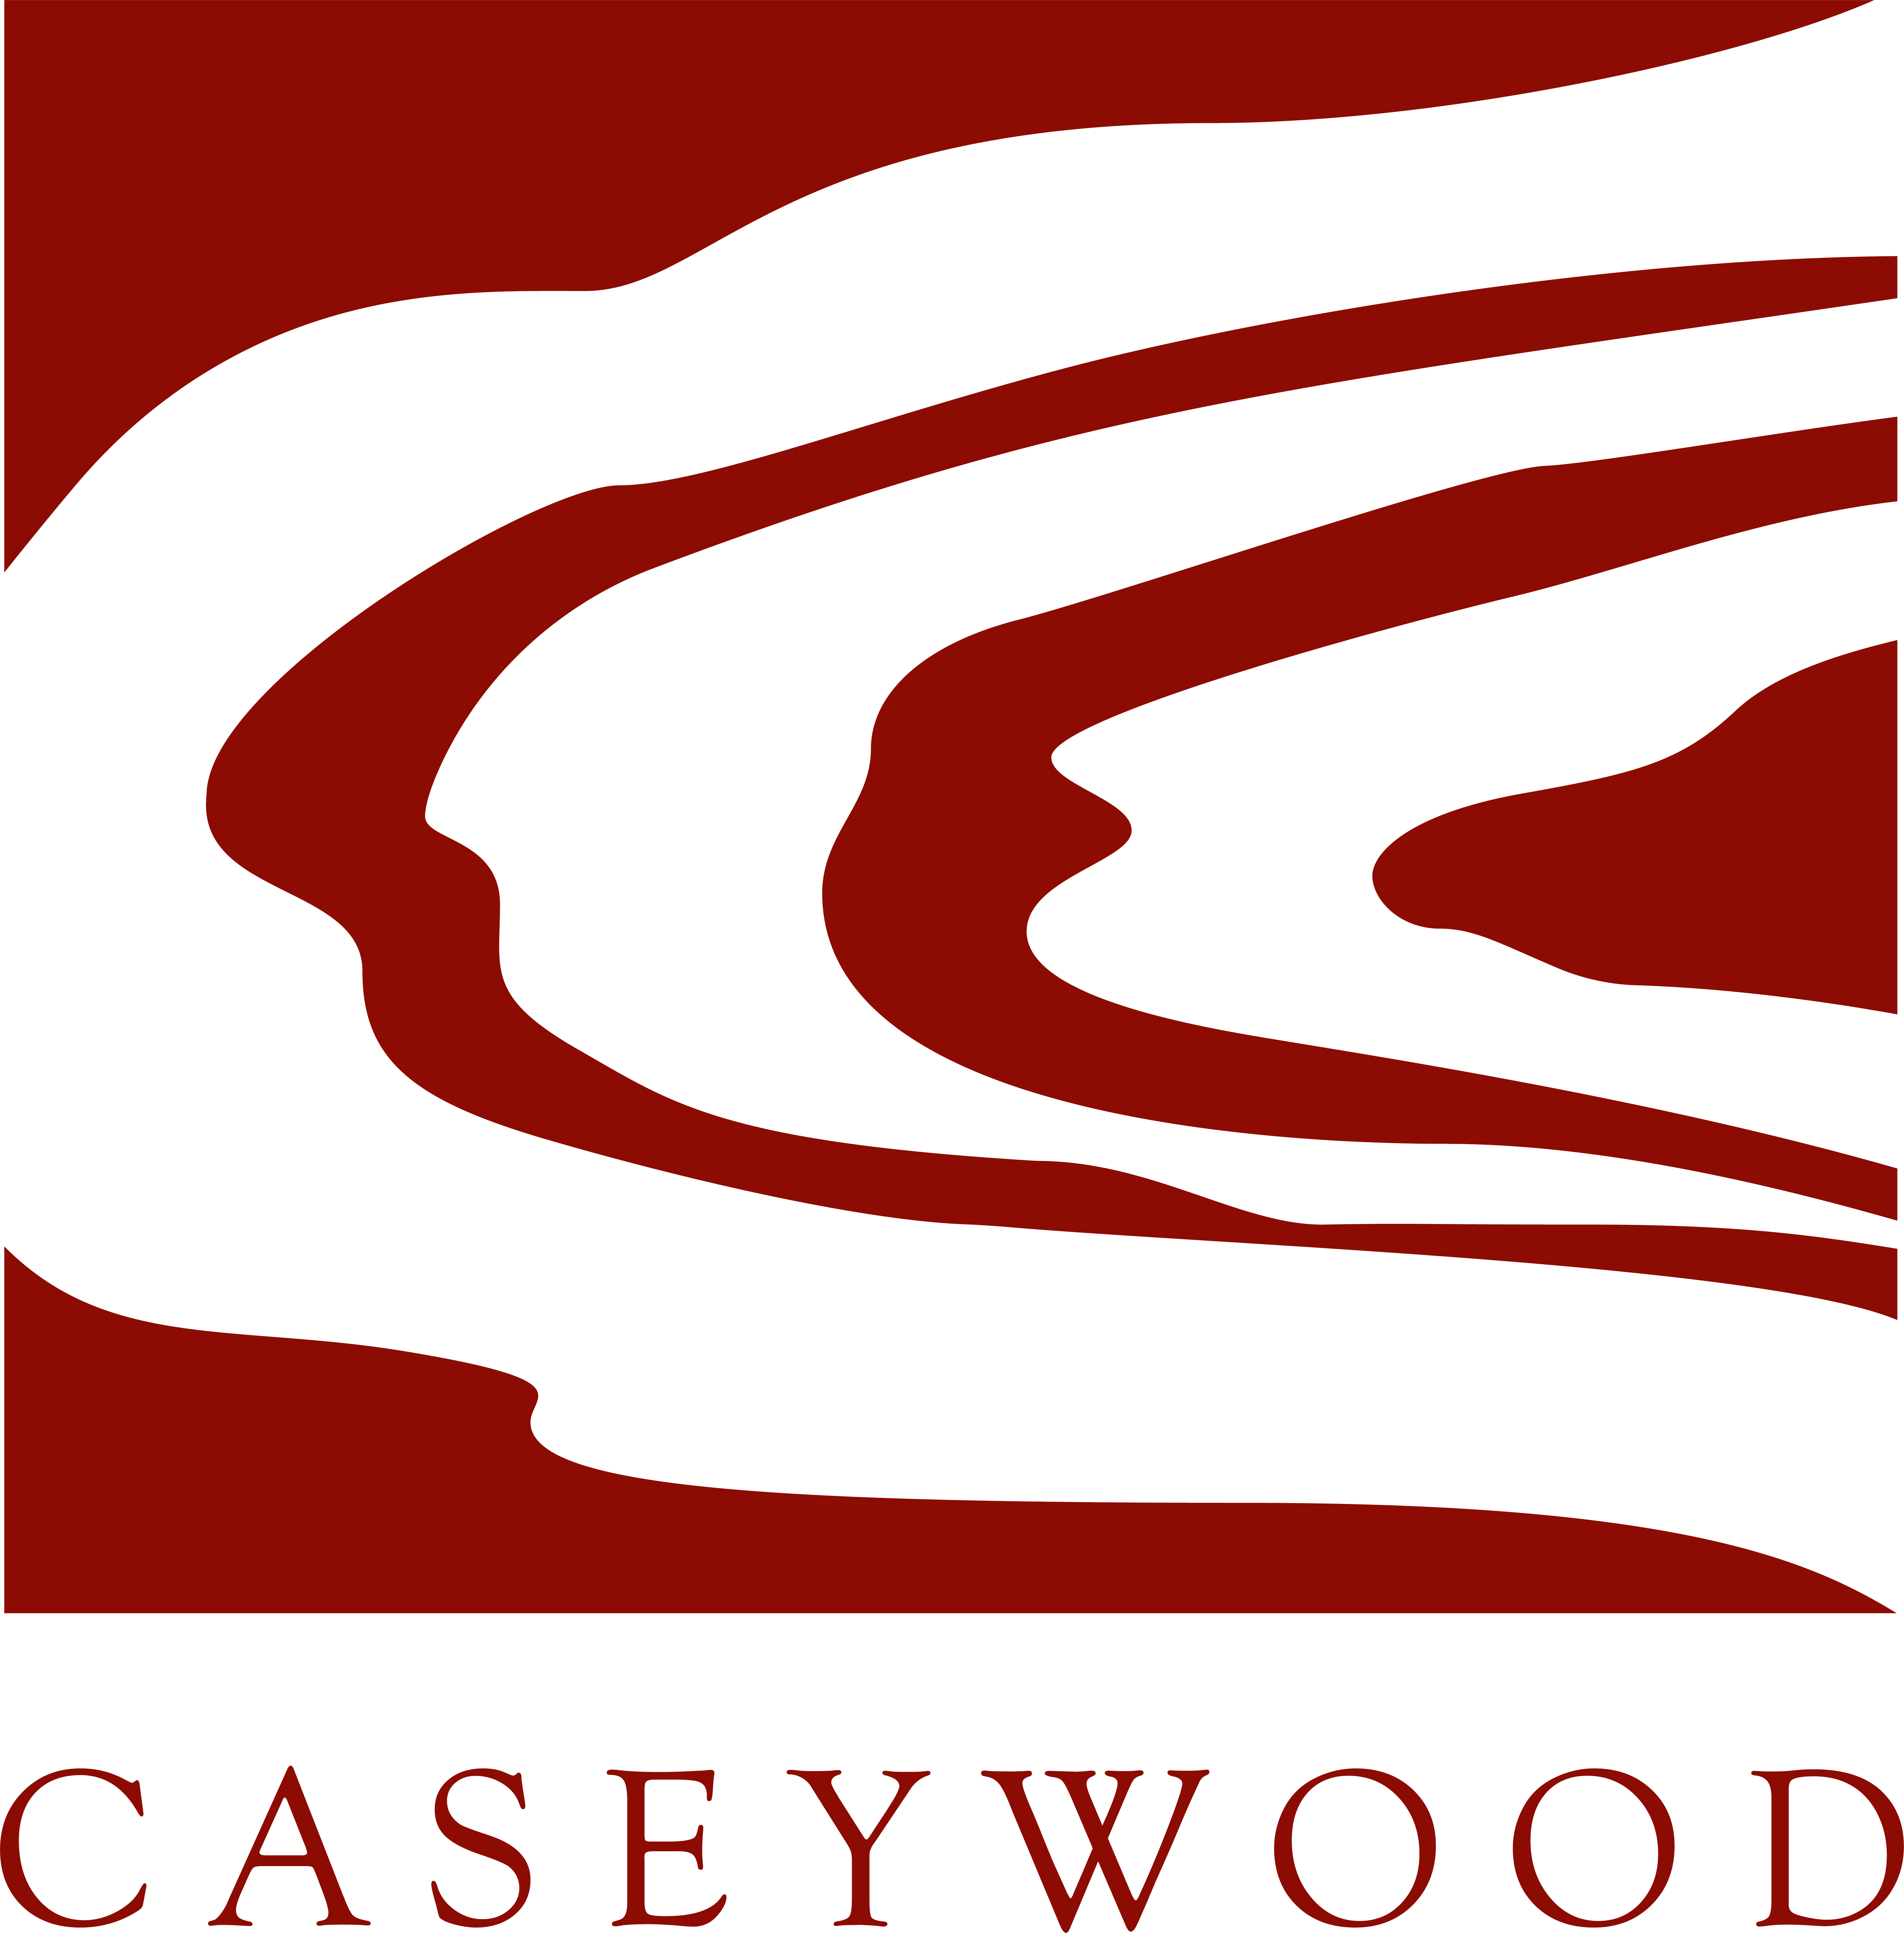 Caseywood logo